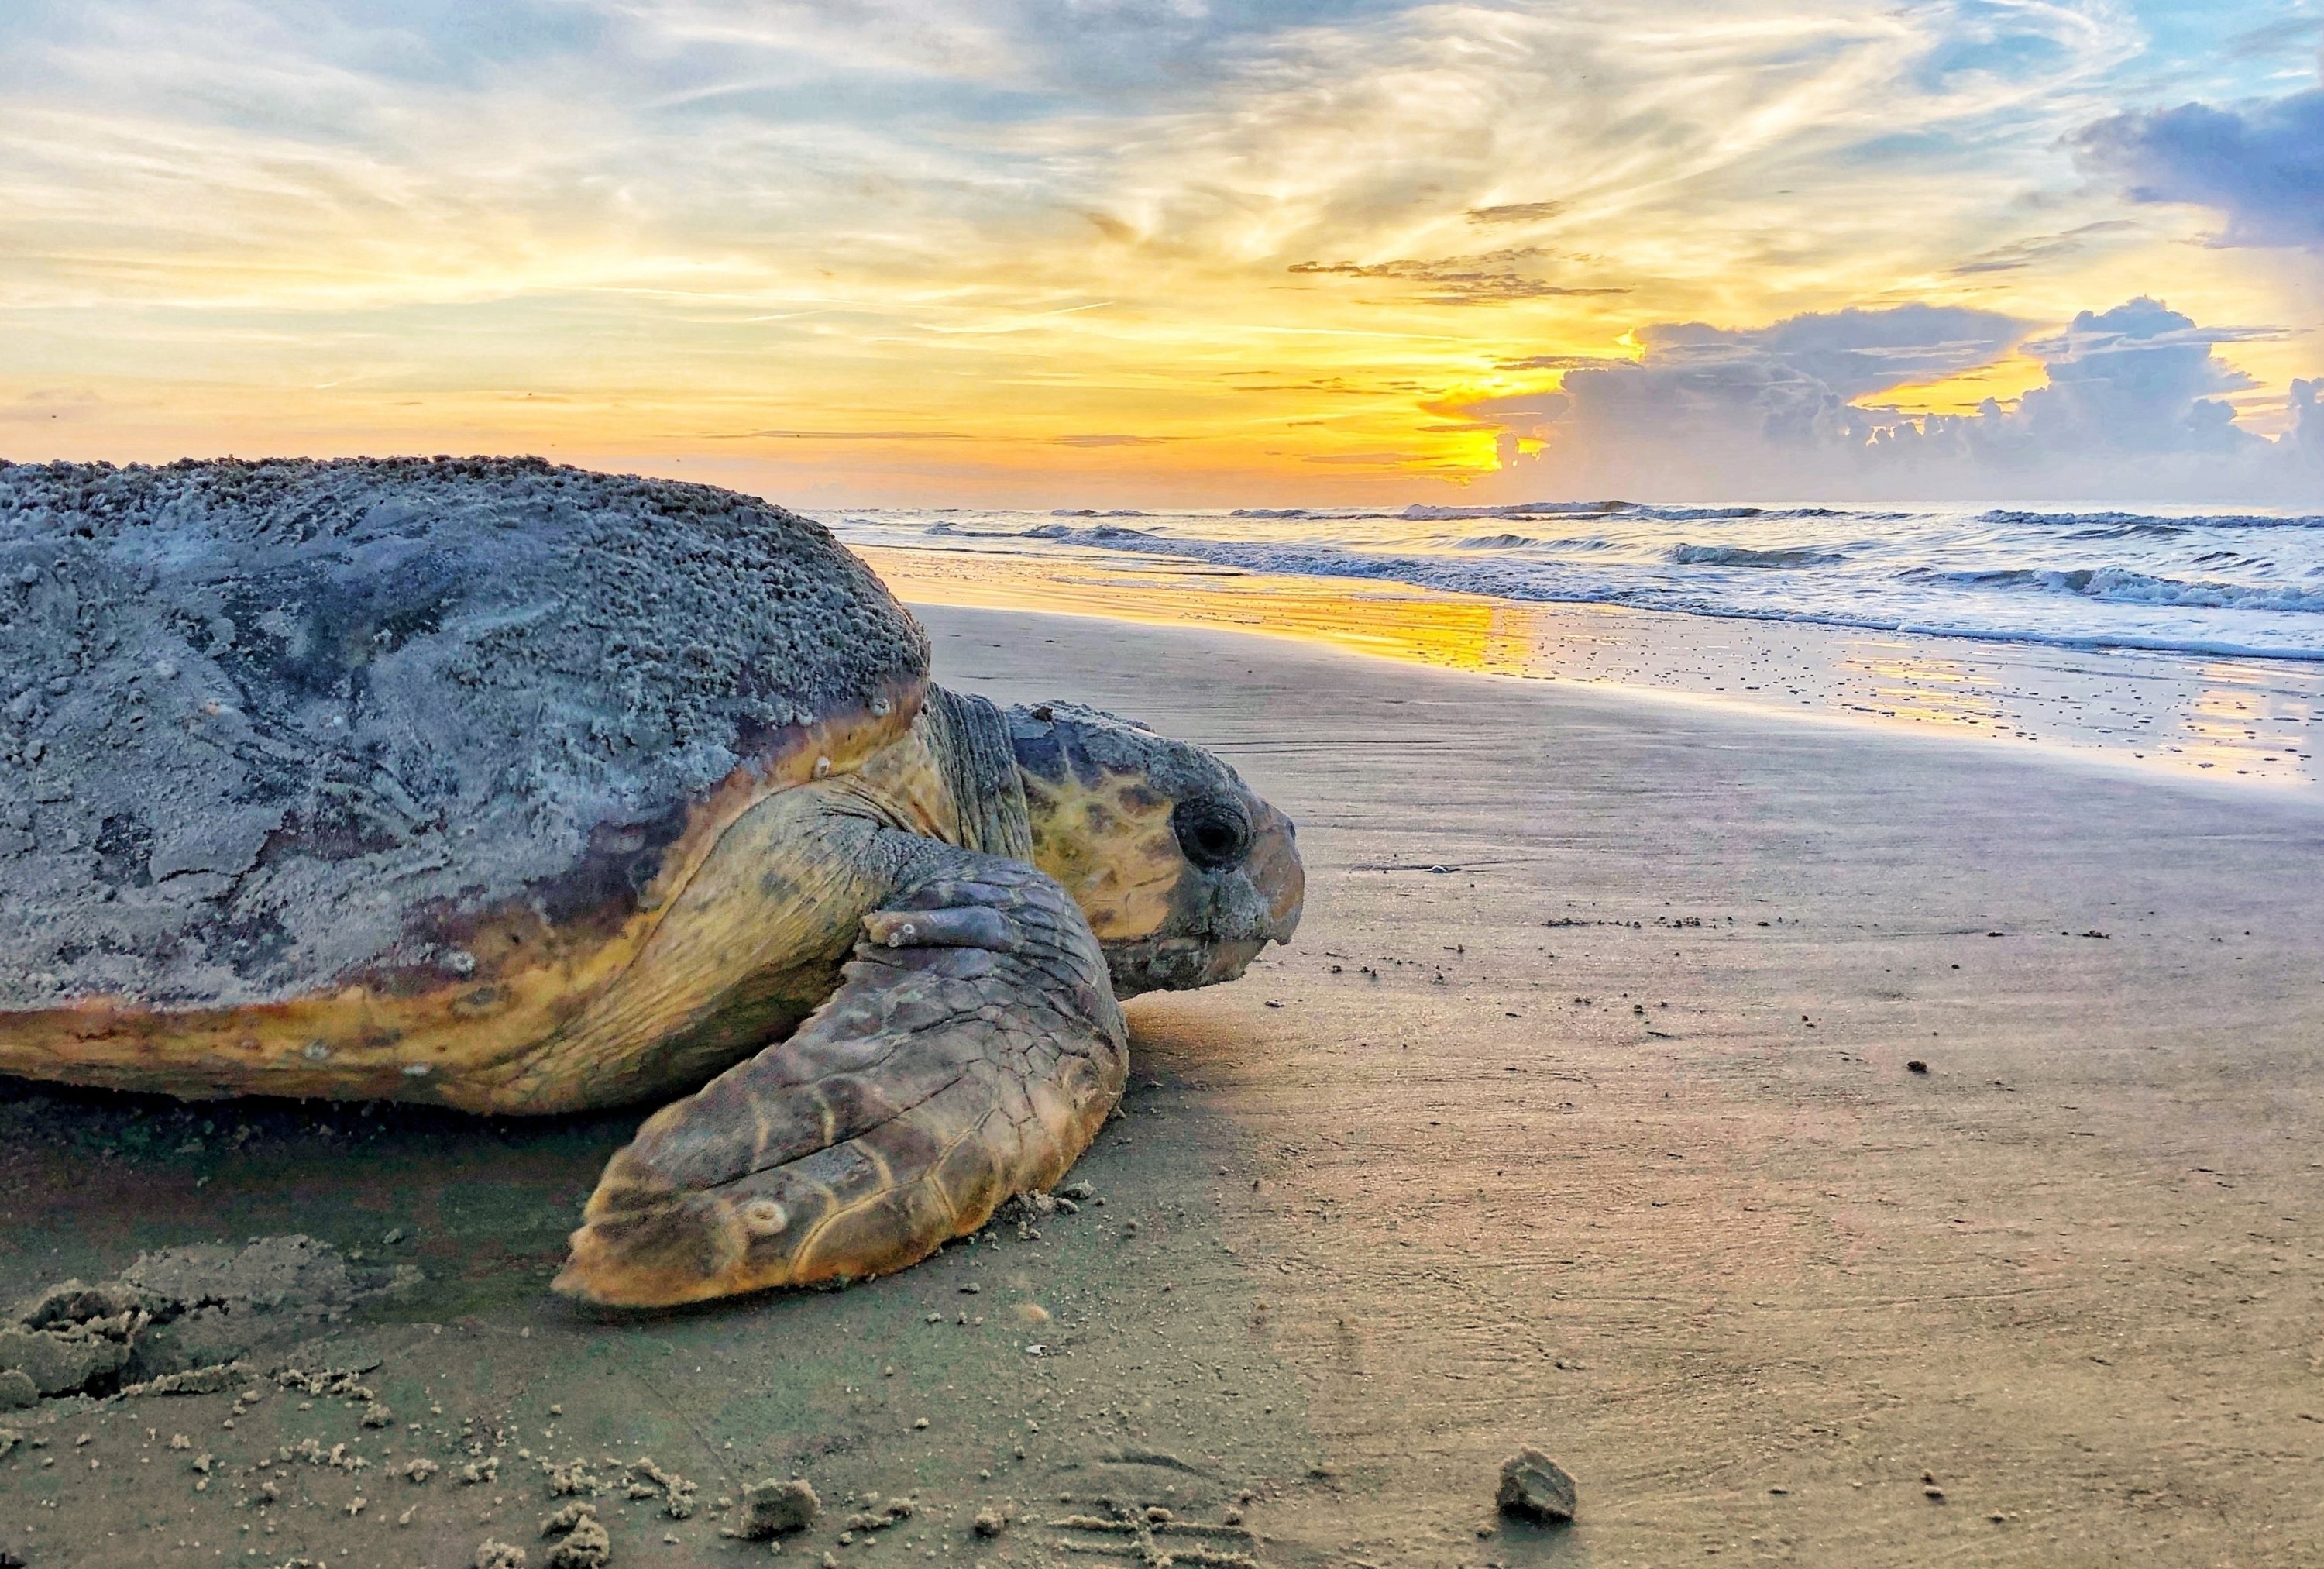 A loggerhead sea turtle returns to the ocean after nesting on Ossabaw Island, Georgia, the U.S., June 30, 2019. (Georgia Department of Natural Resources via AP)